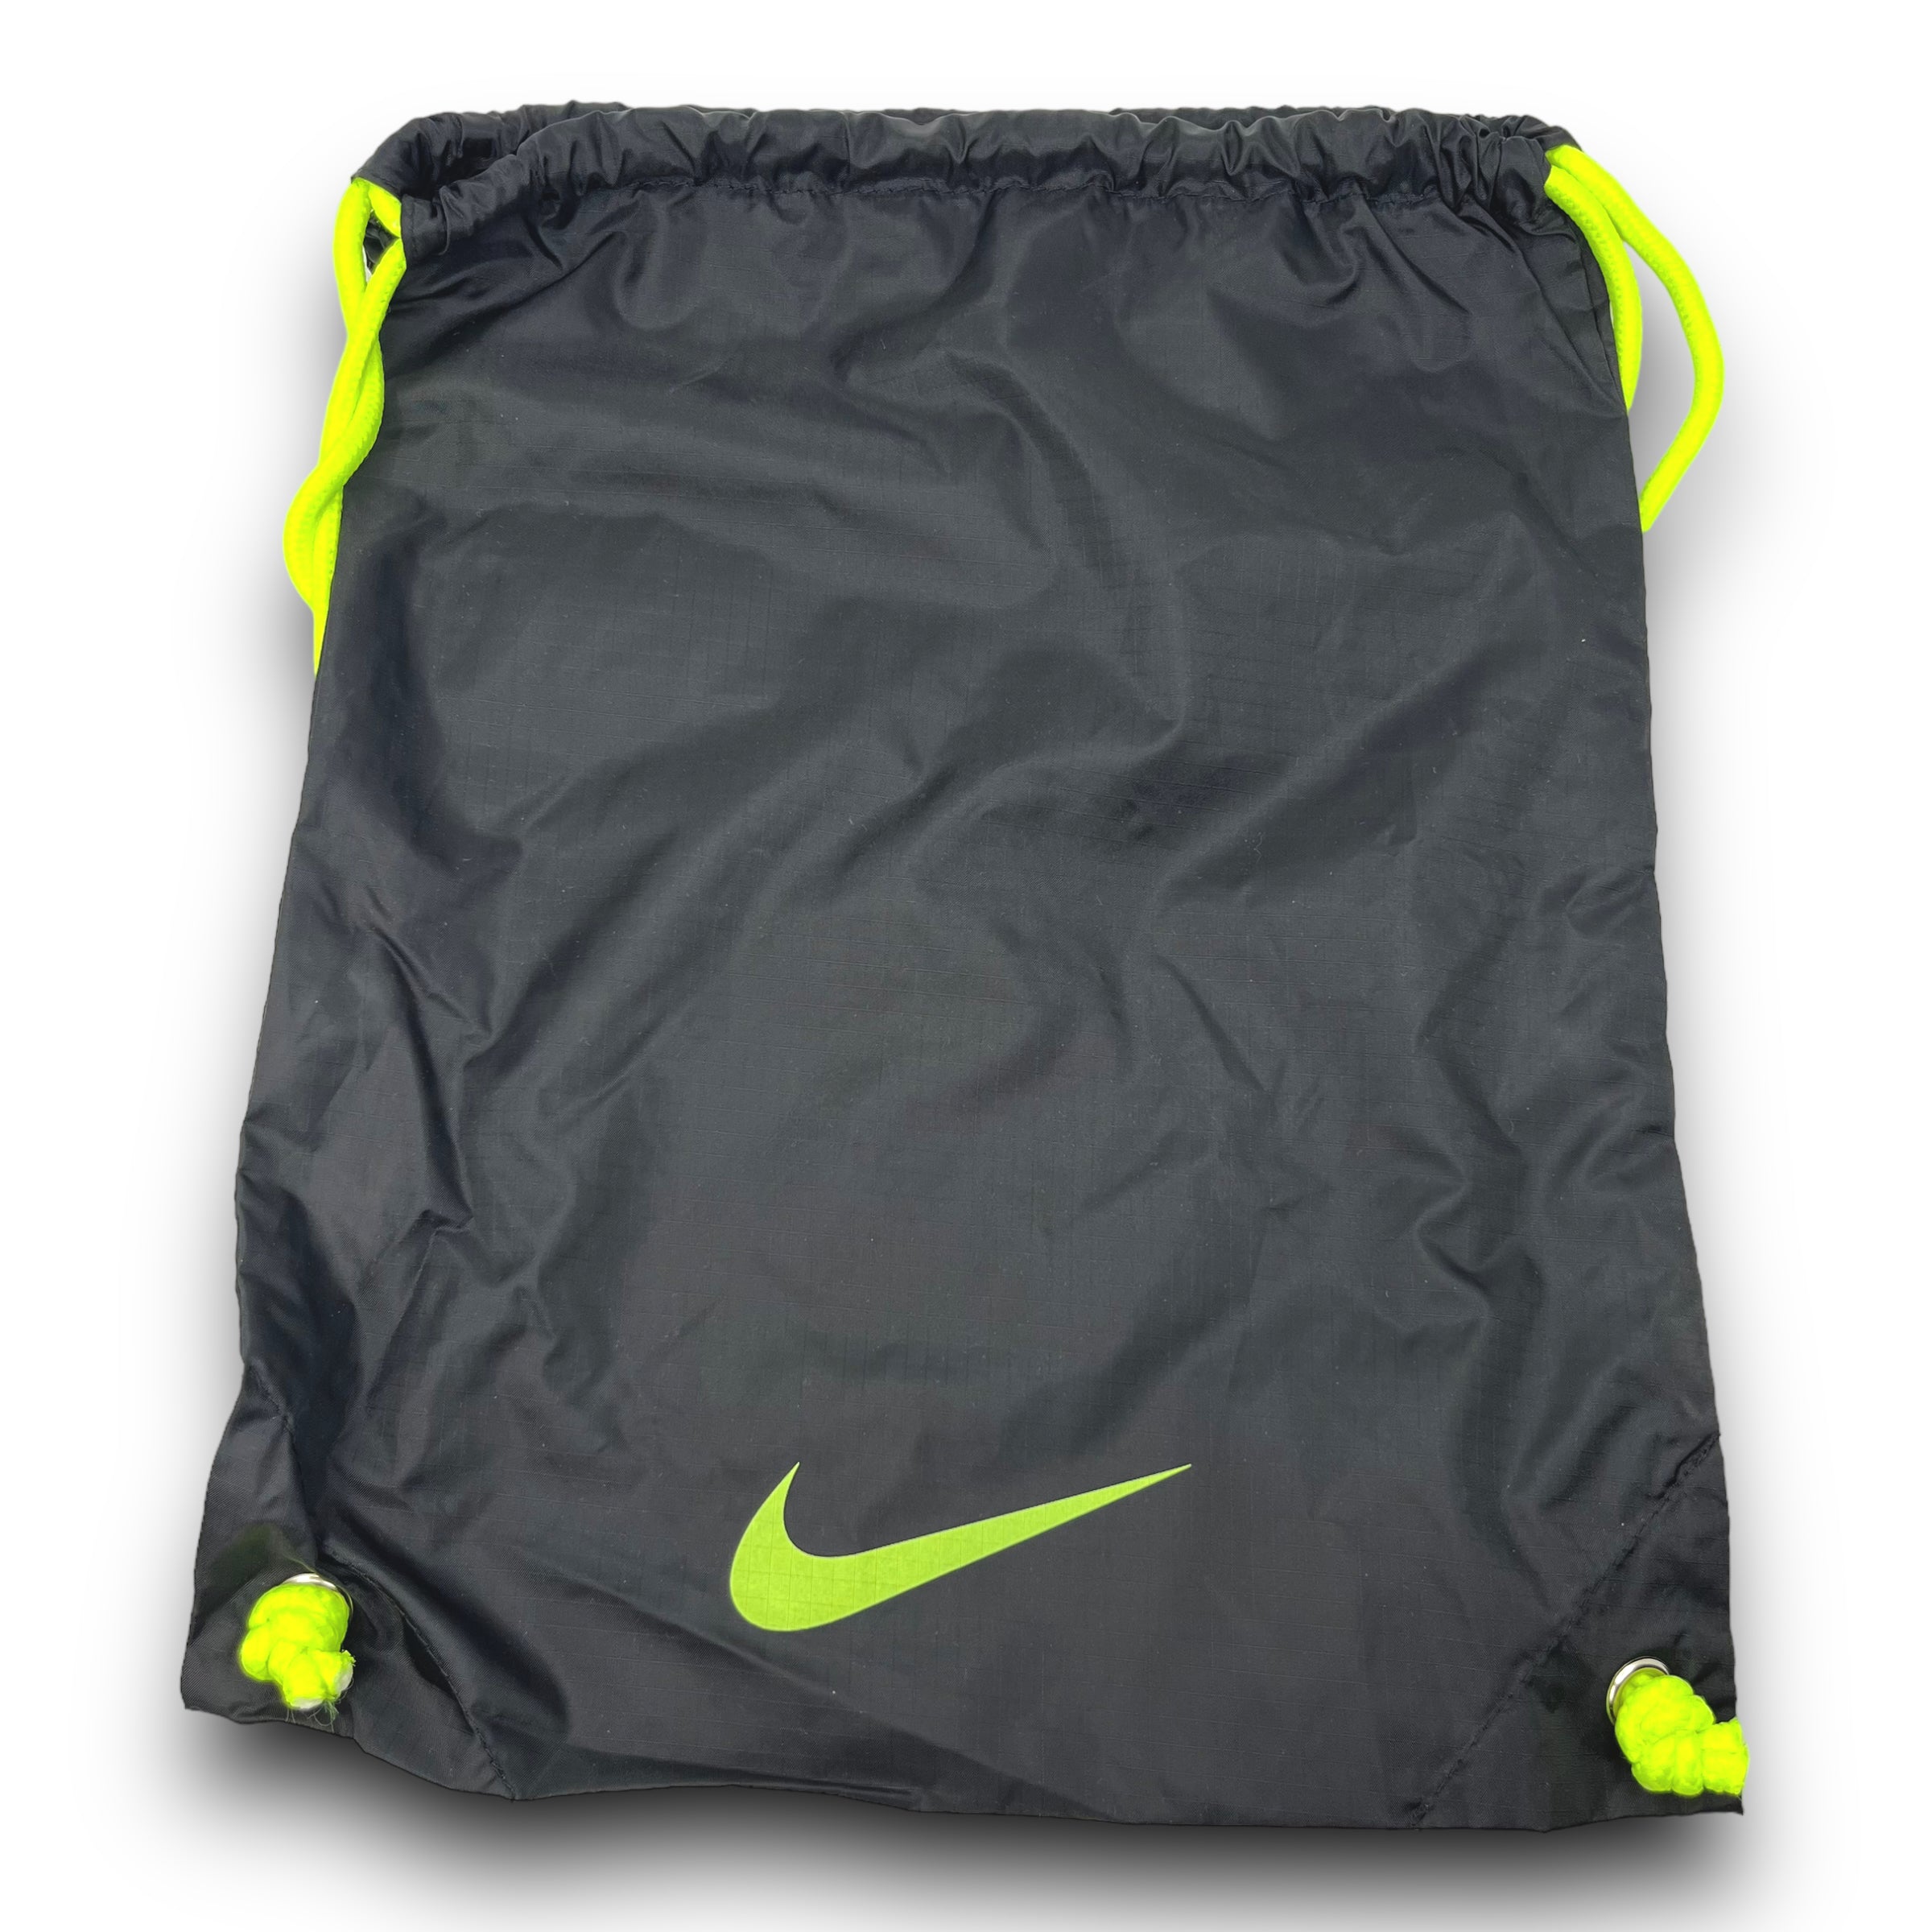 Nike carry bag